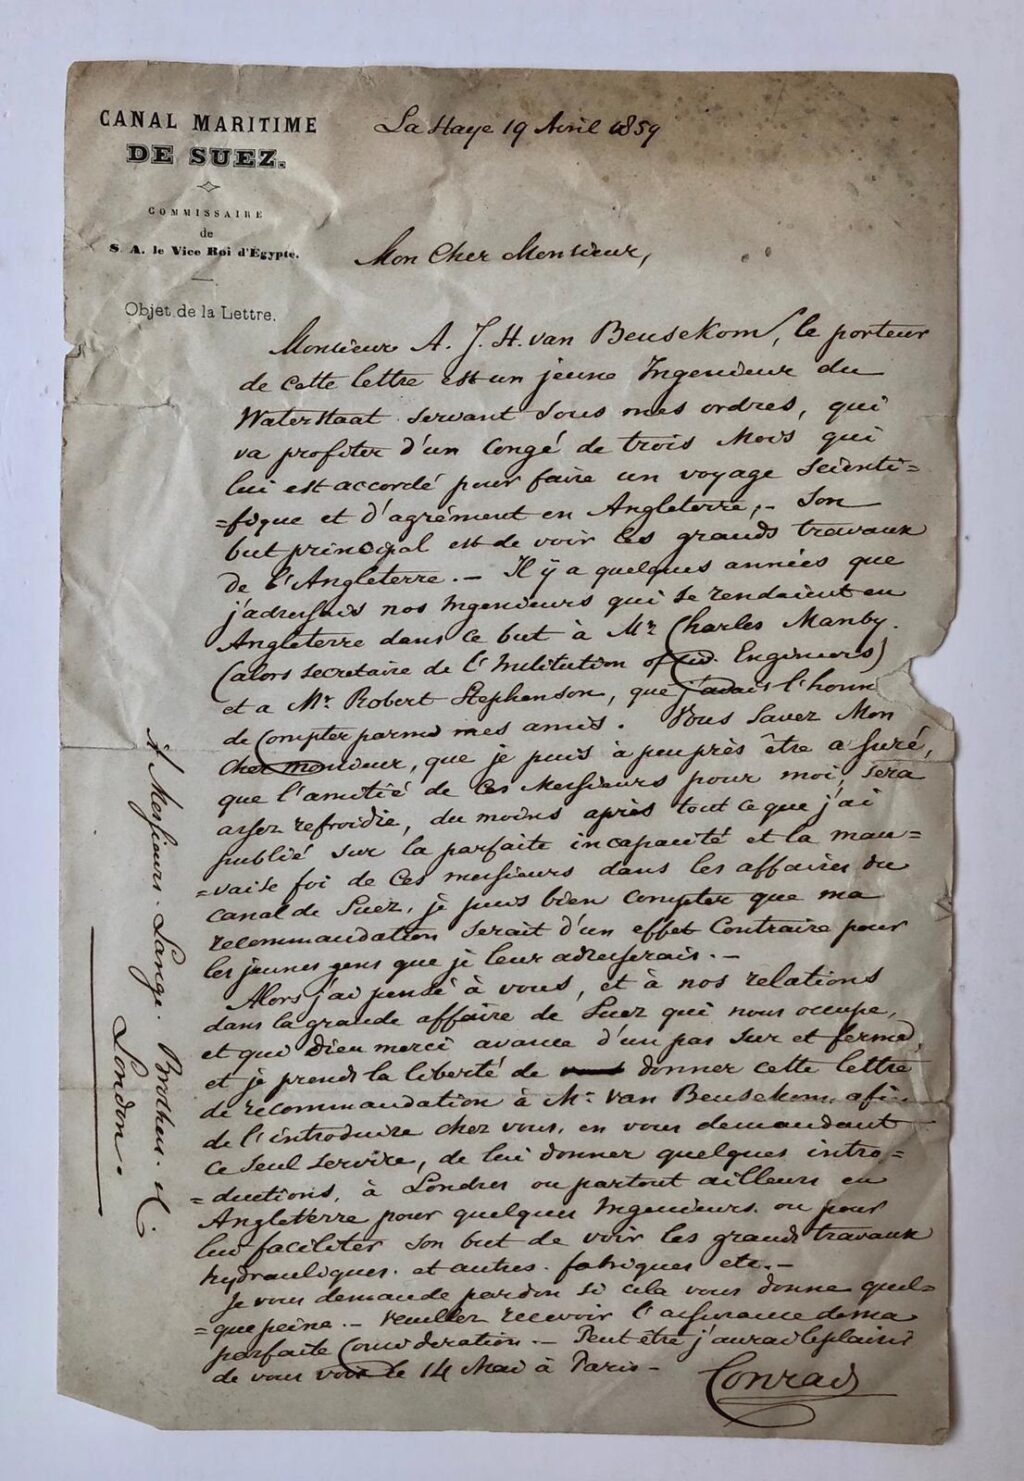 [Manuscript] CONRAD, VAN BEUSEKOM Brief van Ir. Conrad, La Haye 1859, aan Messrs Lange Brothers te Londen; 8(, 1 p.